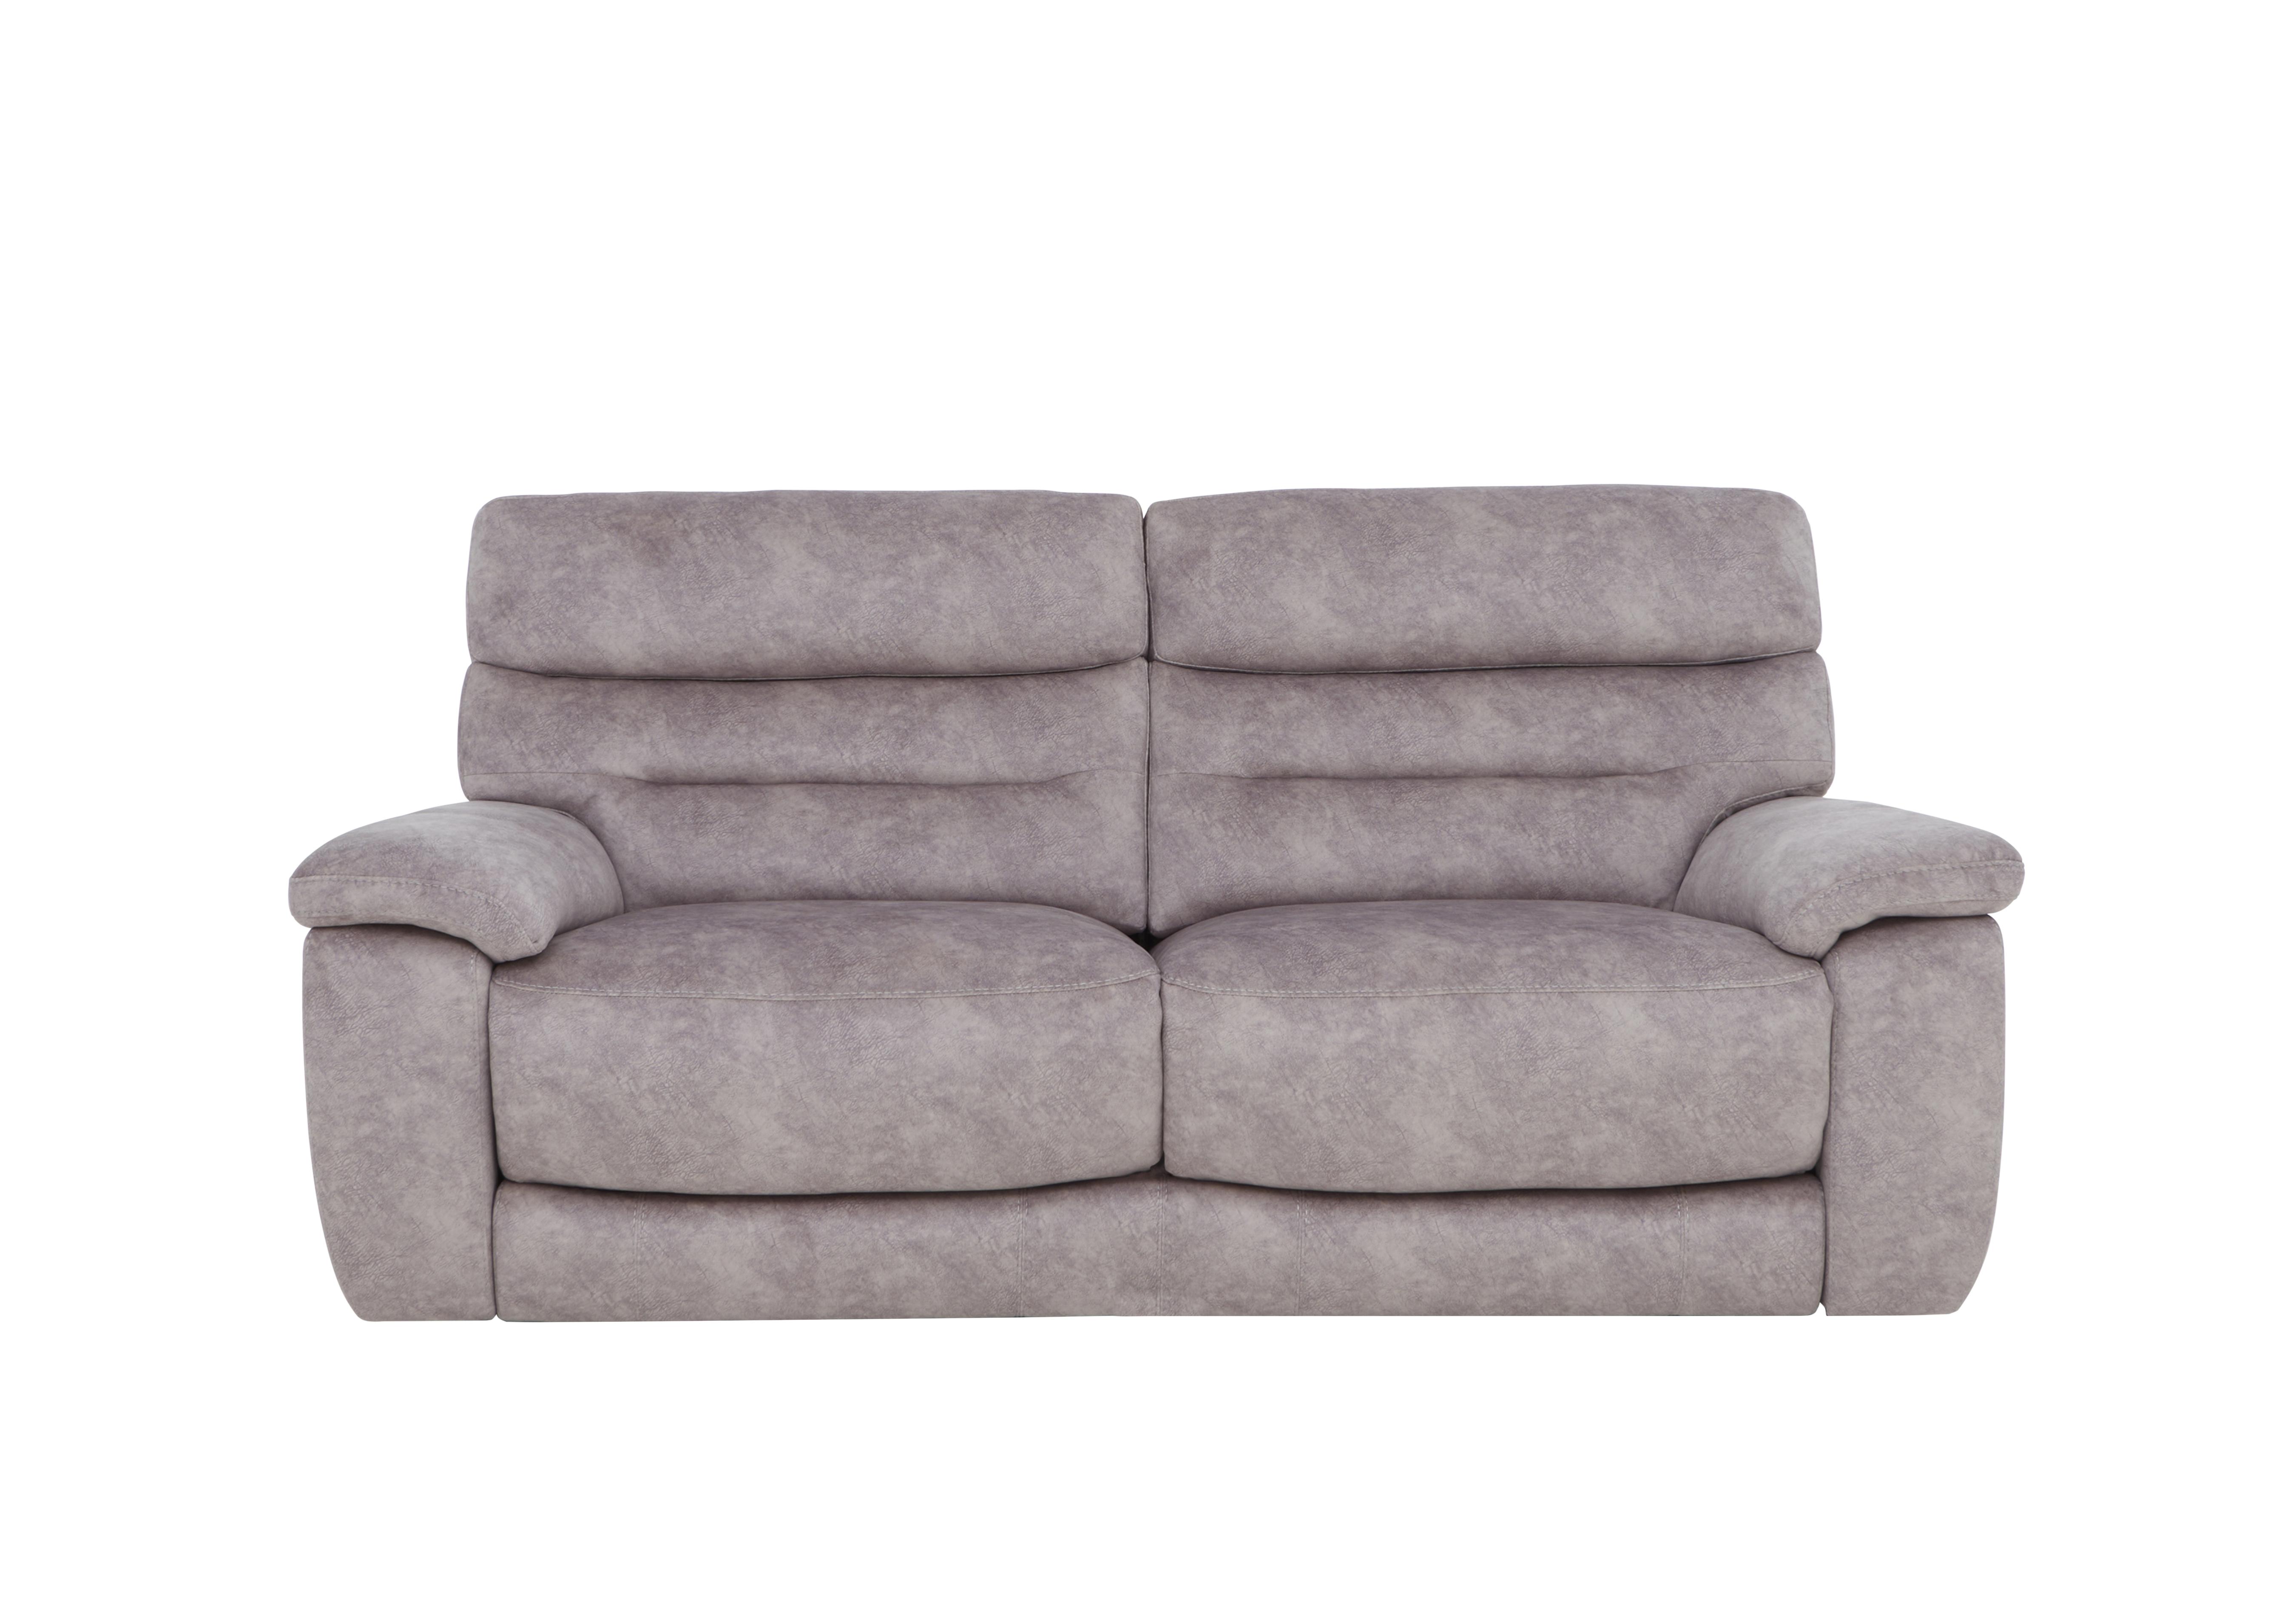 Nimbus 3 Seater Fabric Sofa in Bfa-Bnn-R28 Grey on Furniture Village